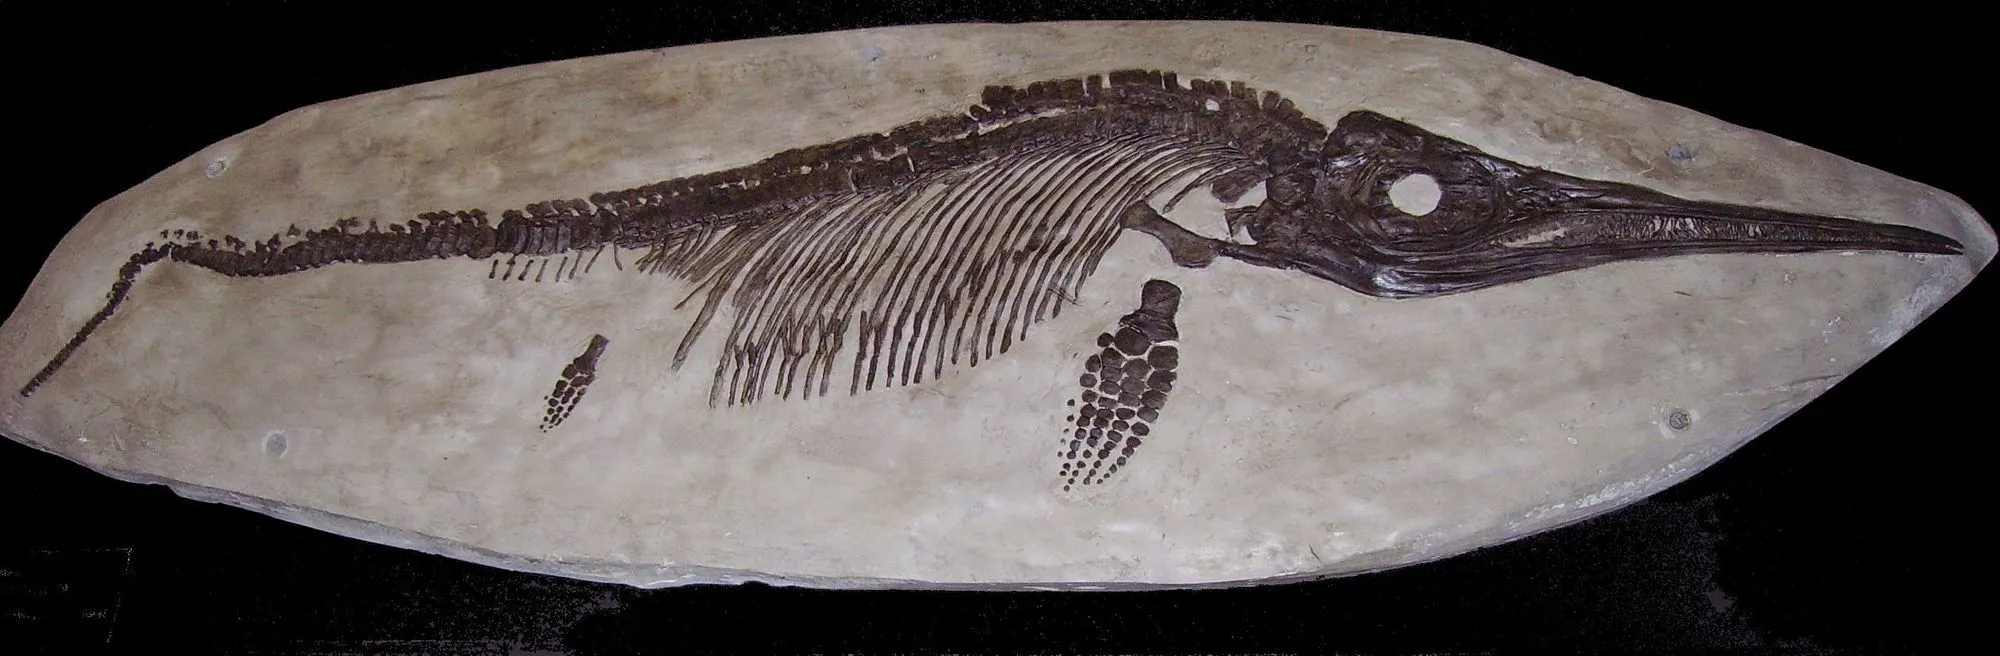 Ichthyosaurs were prehistoric marine reptiles.